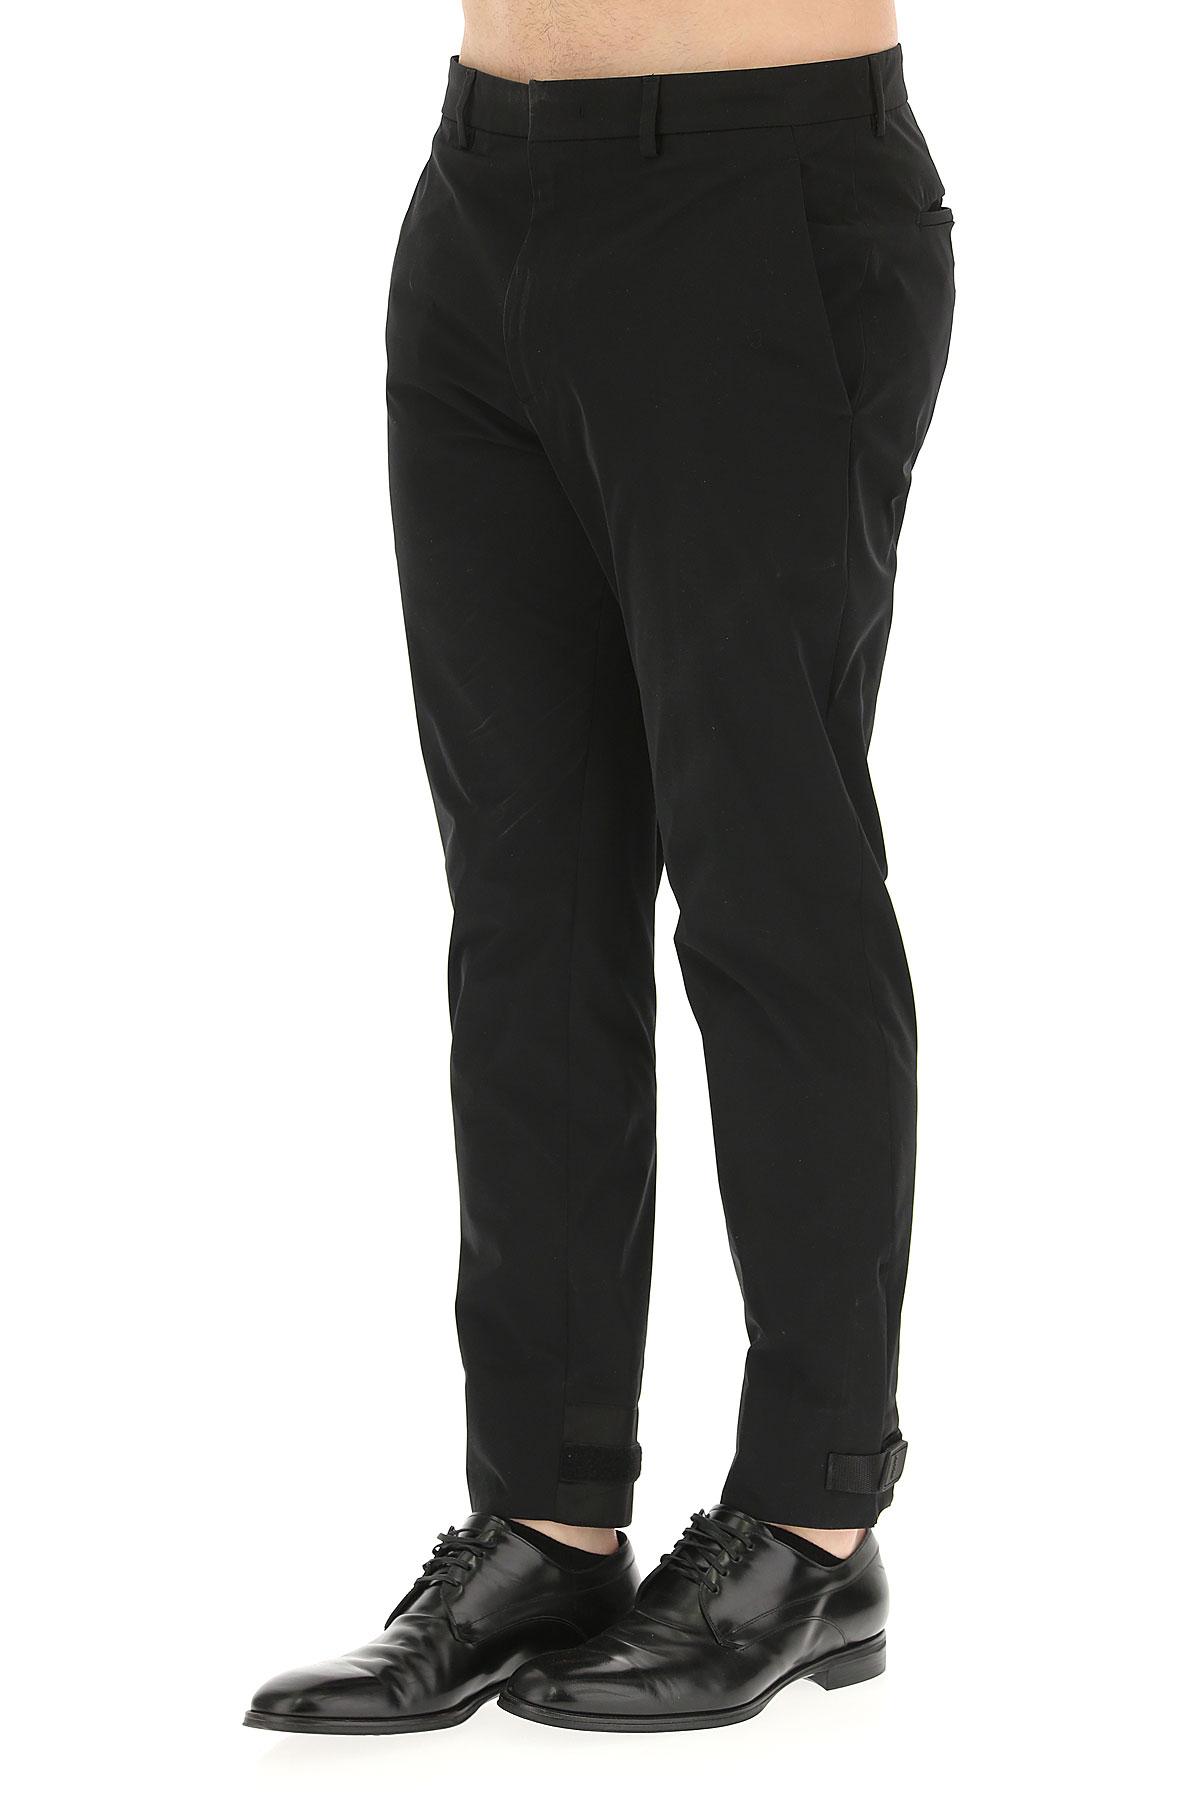 Prada Synthetic Pants For Men On Sale in Black for Men - Lyst